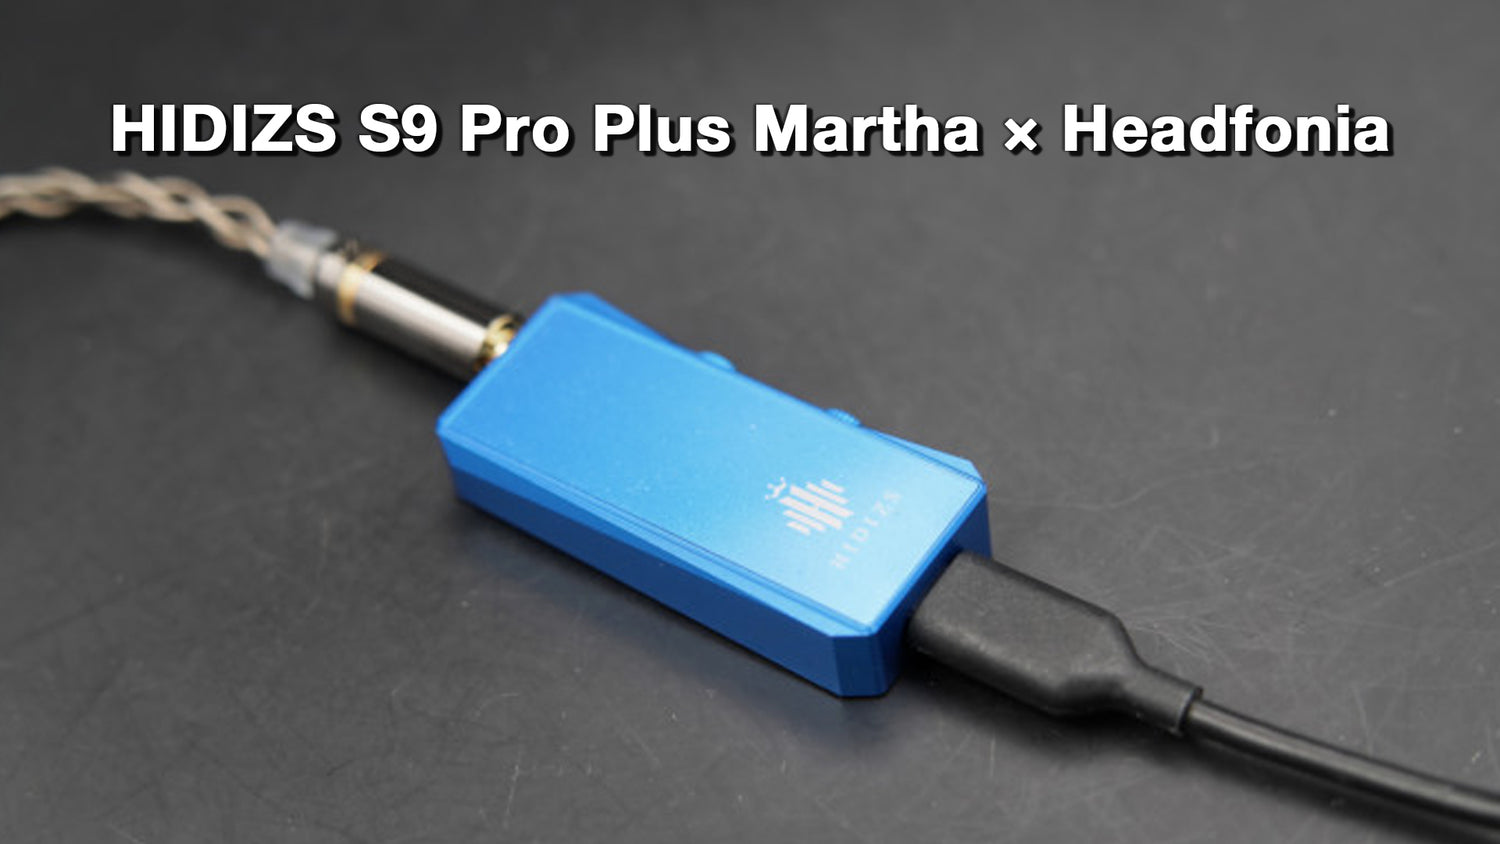 HIDIZS S9 Pro Plus Martha Review - Headfonia